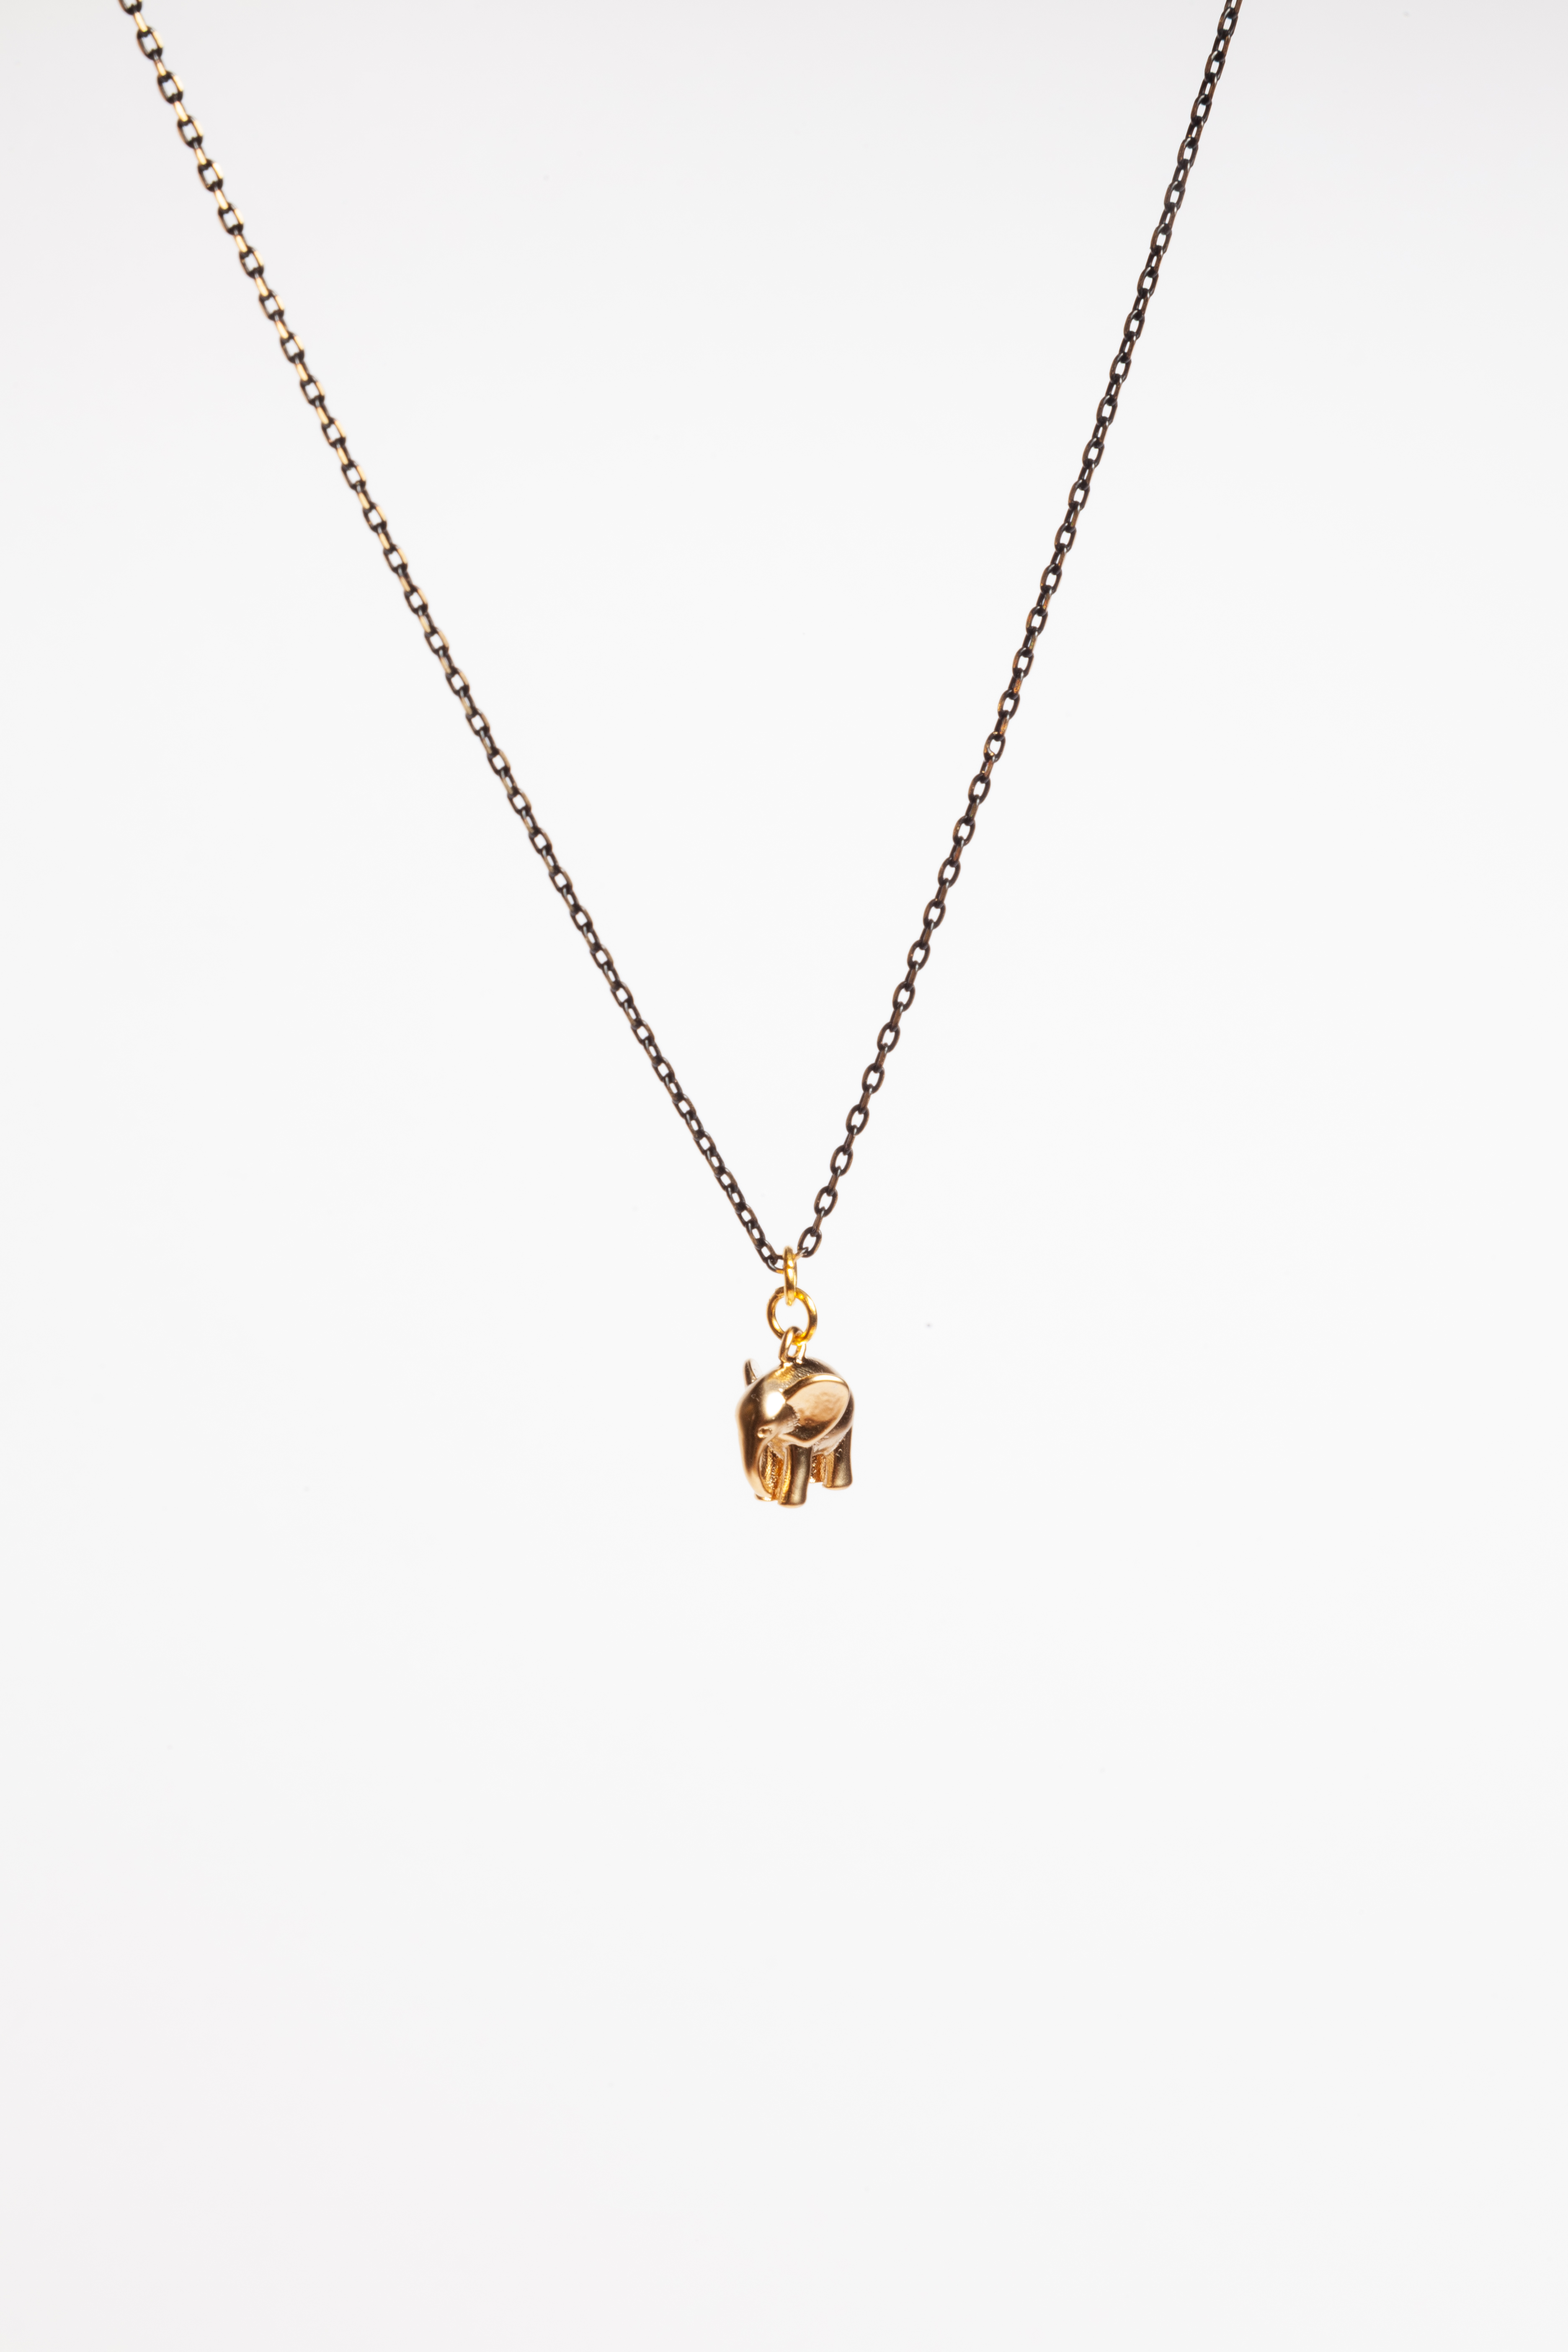 ELLI necklace with brass elephant